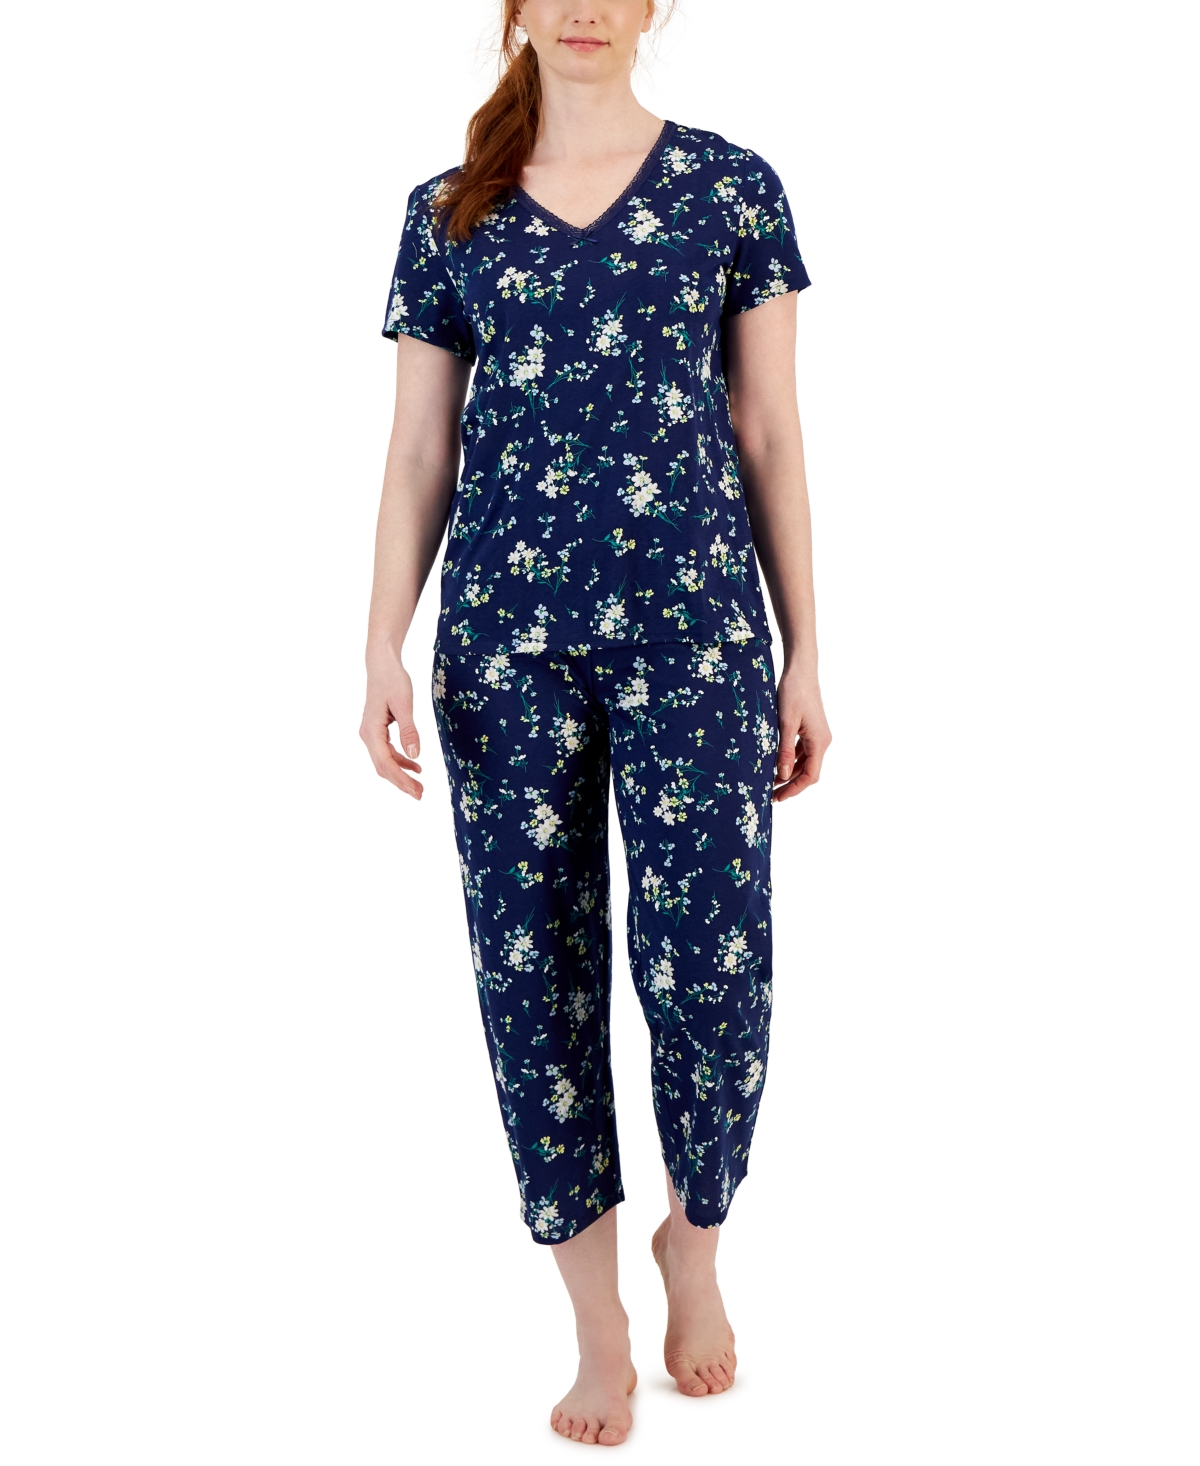 Women's Croft & Barrow® Lace-Trim Pajama Top and Pajama Capri Set